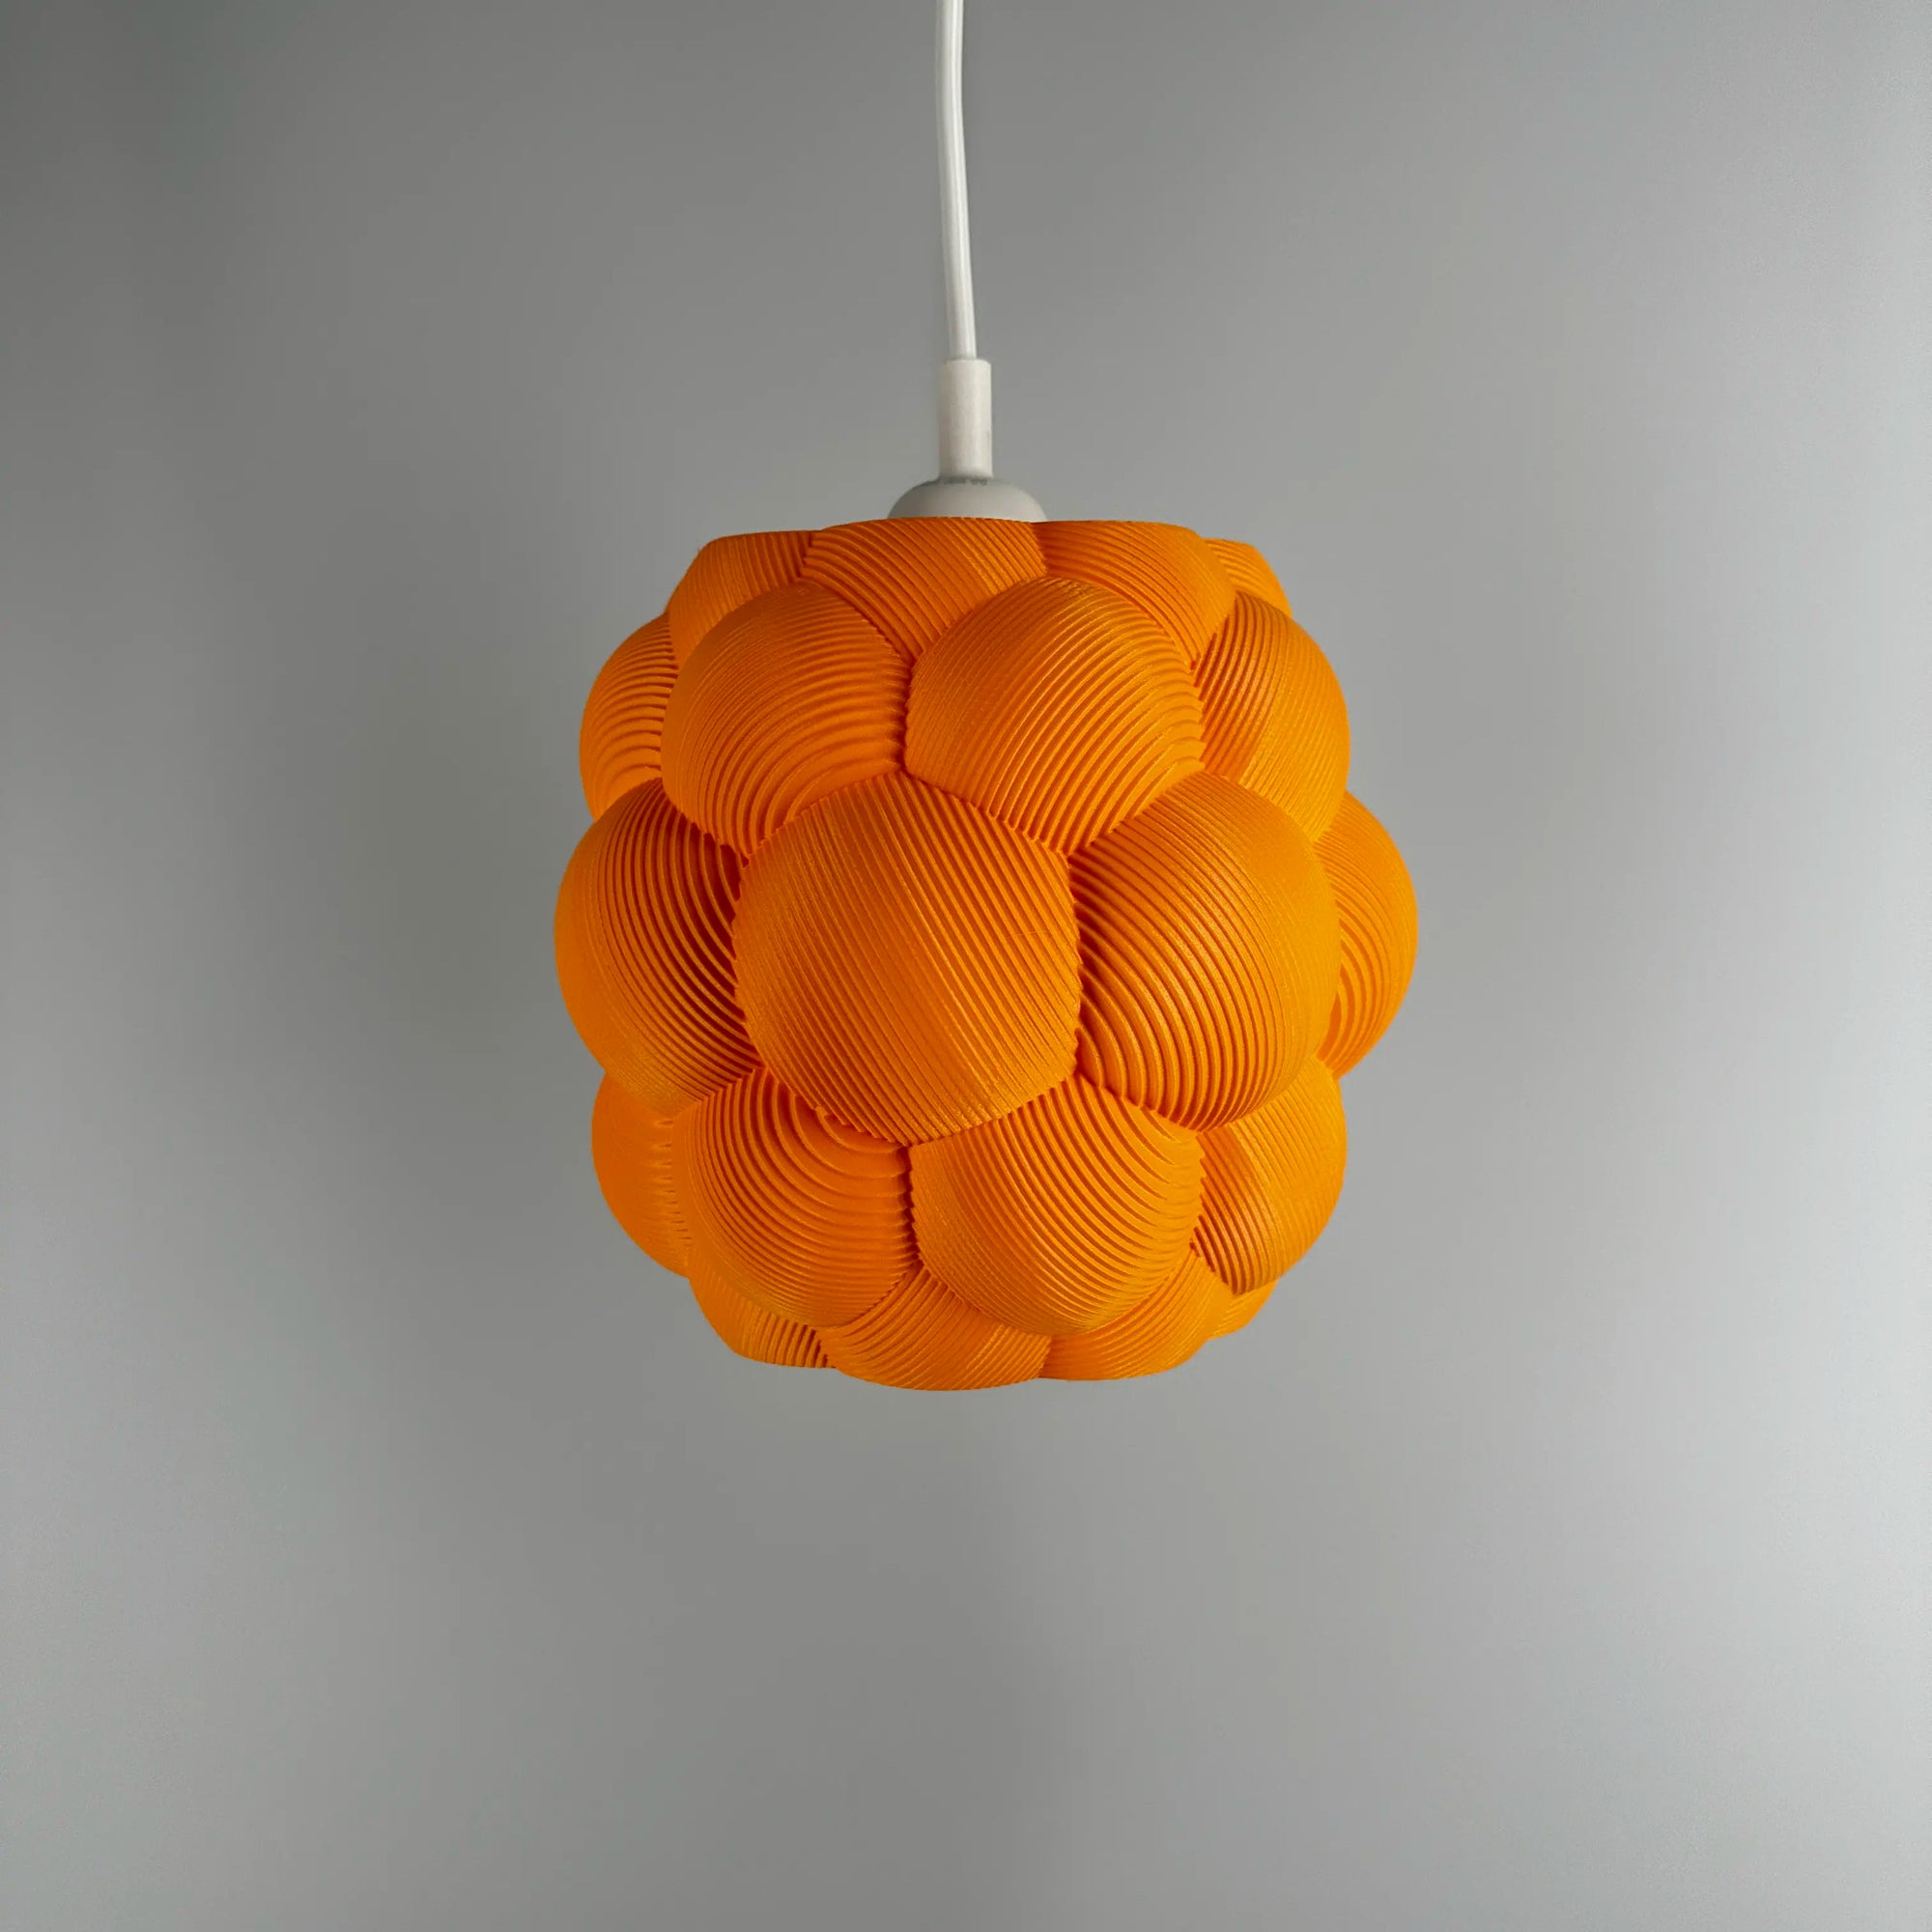 3D printed Apo Malli lampshade in modern design in orange biodegradable material.